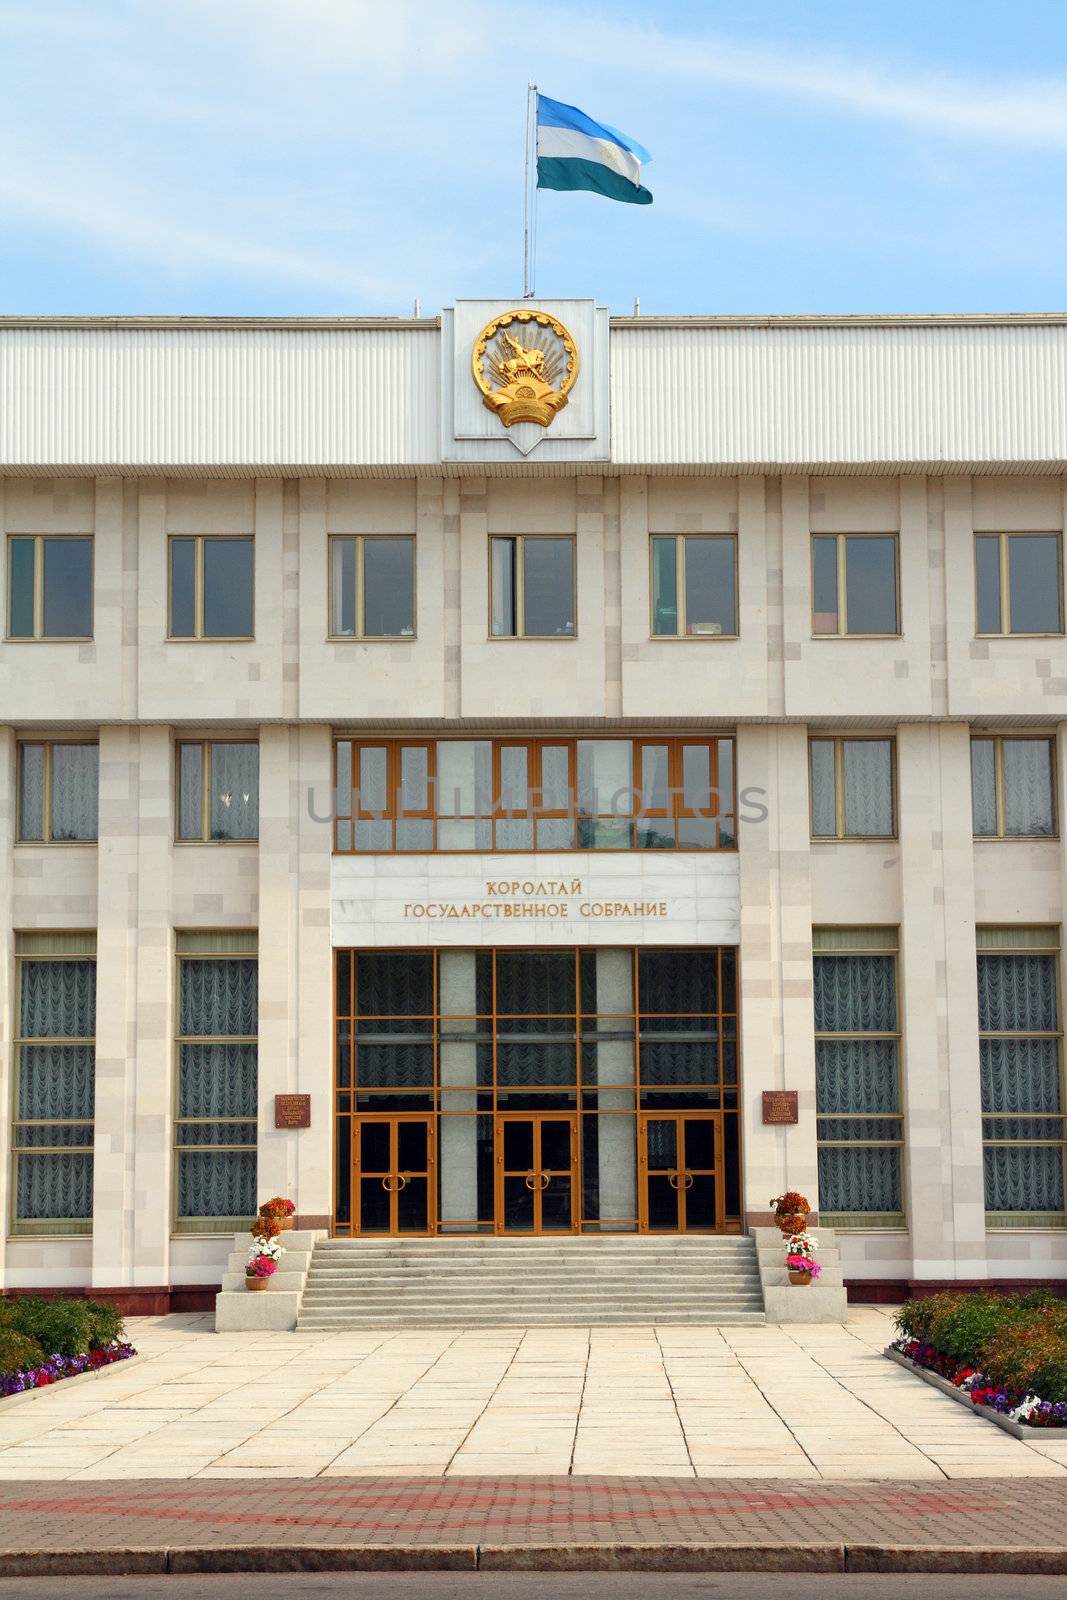 Bashkortostan curultay building in Ufa Russia - government parliament